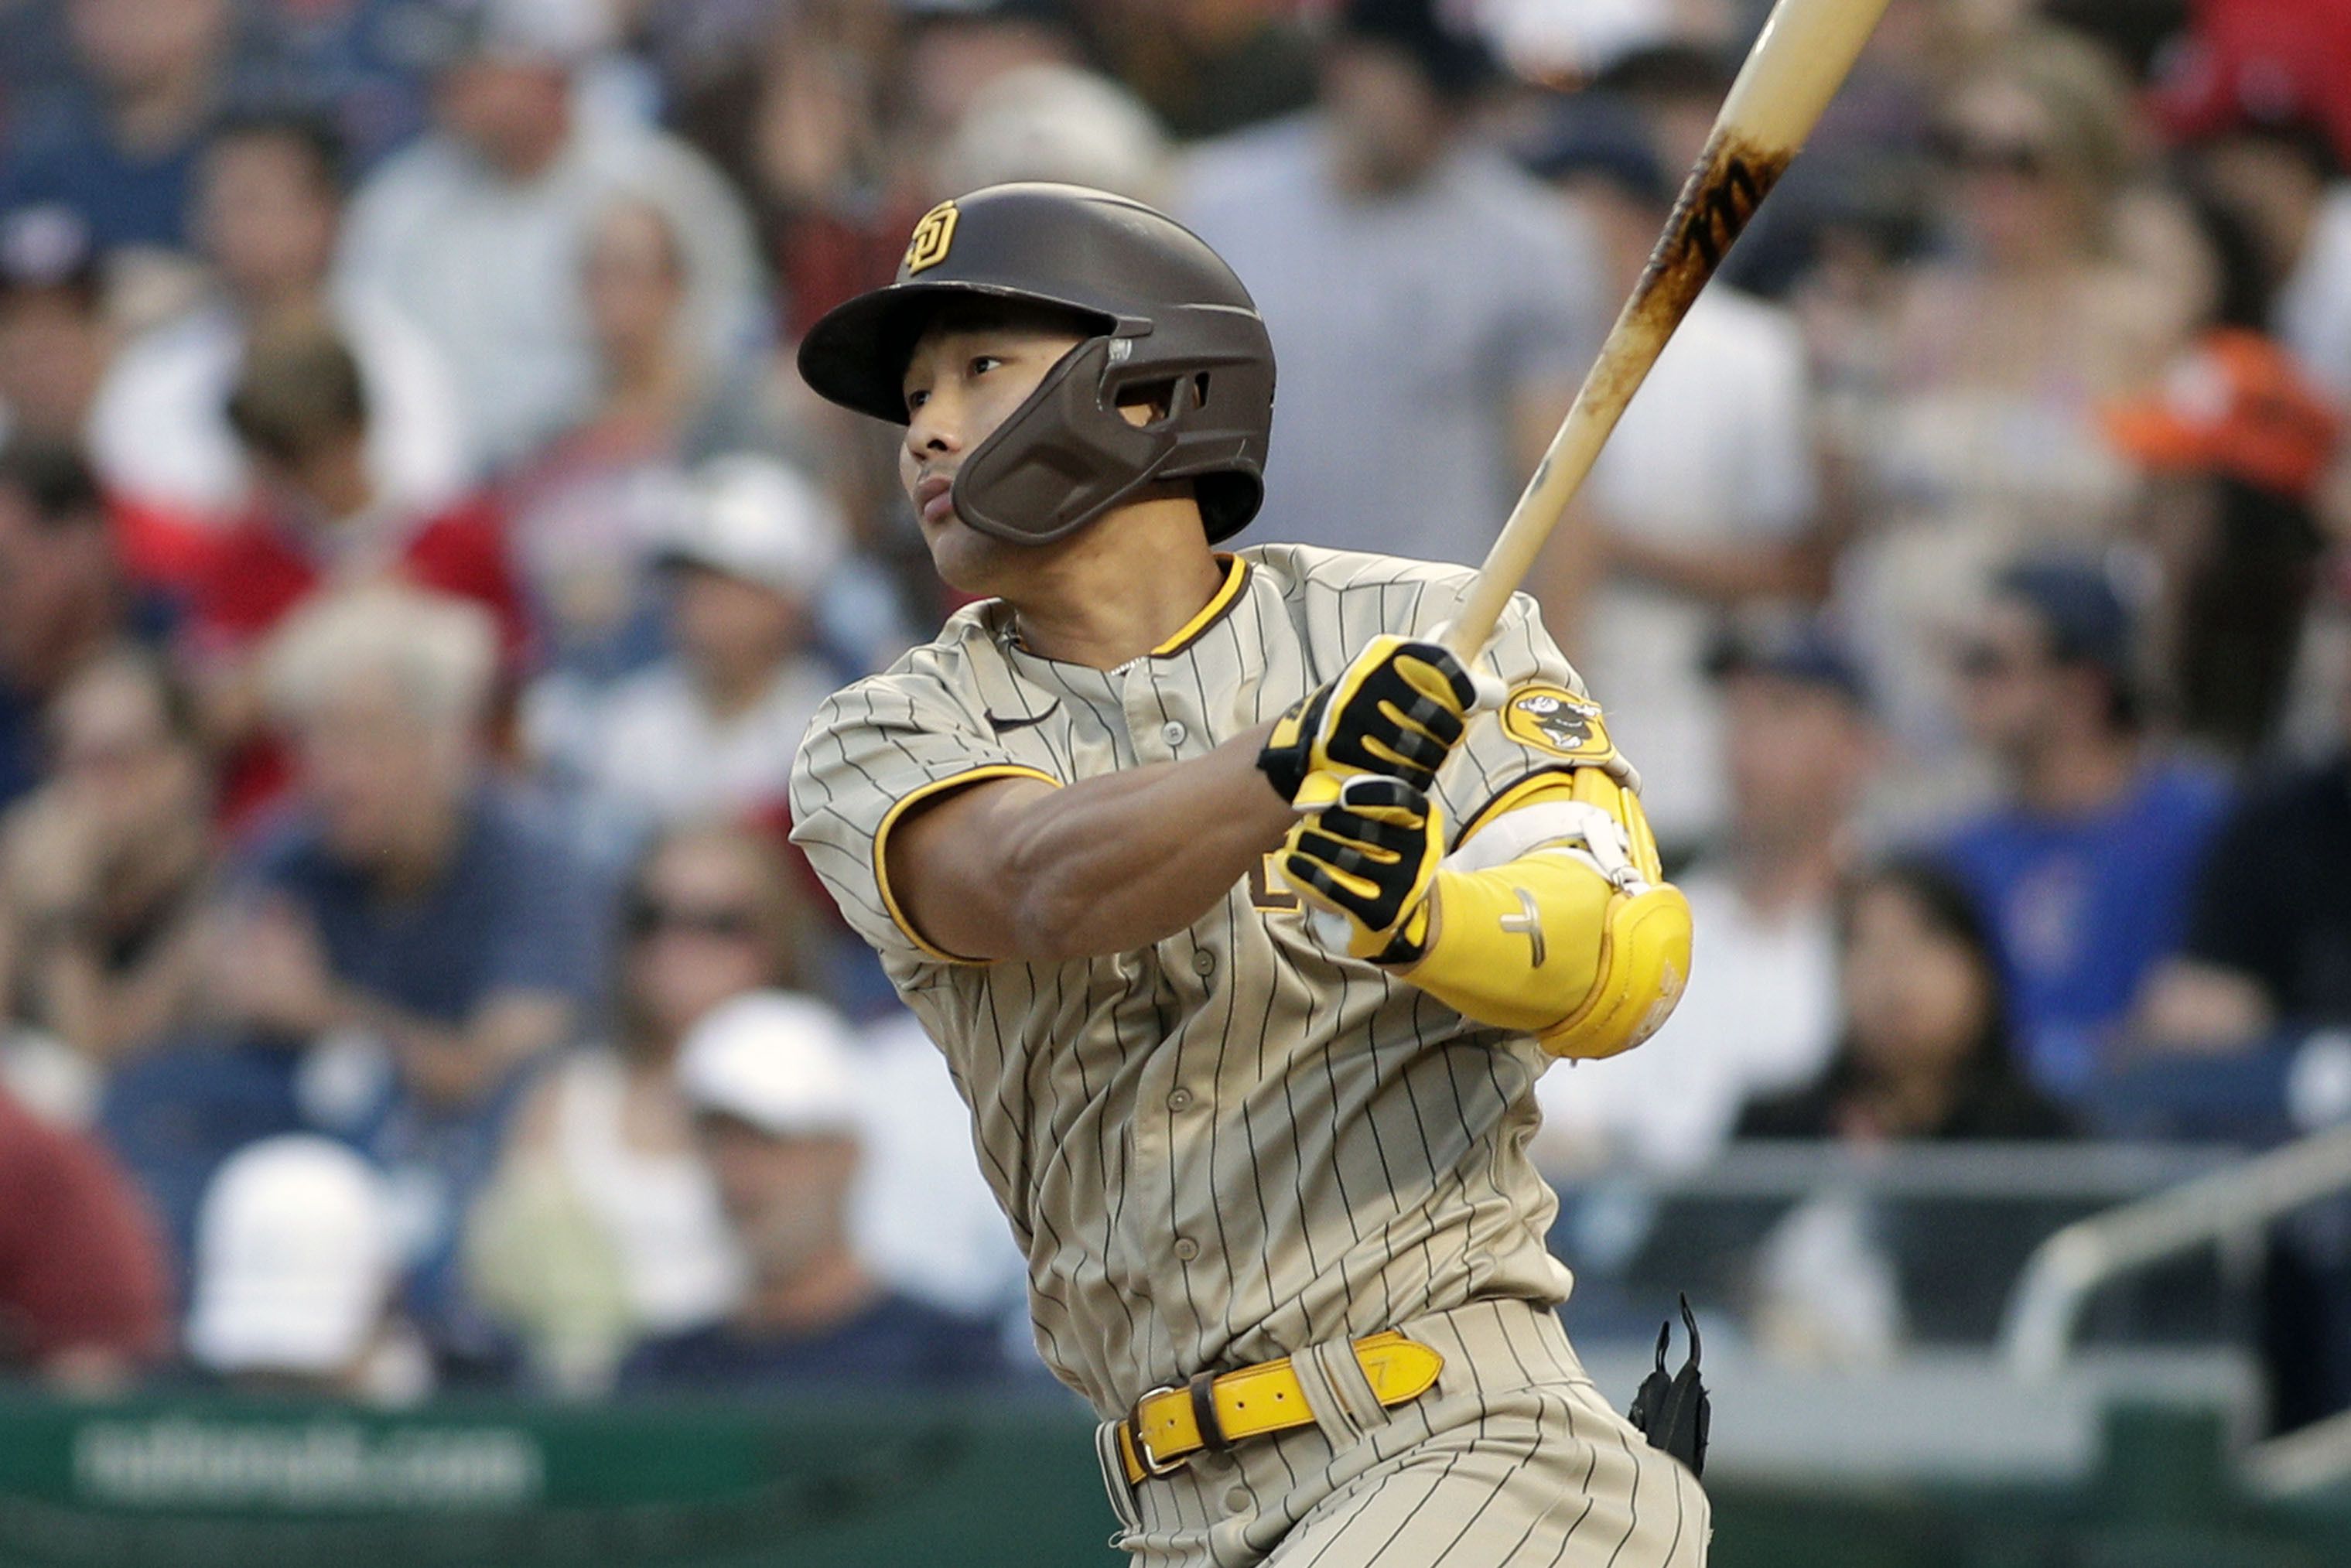 MLB Roundup: Jorge Alfaro's ninth-inning blast boosts Padres over Marlins